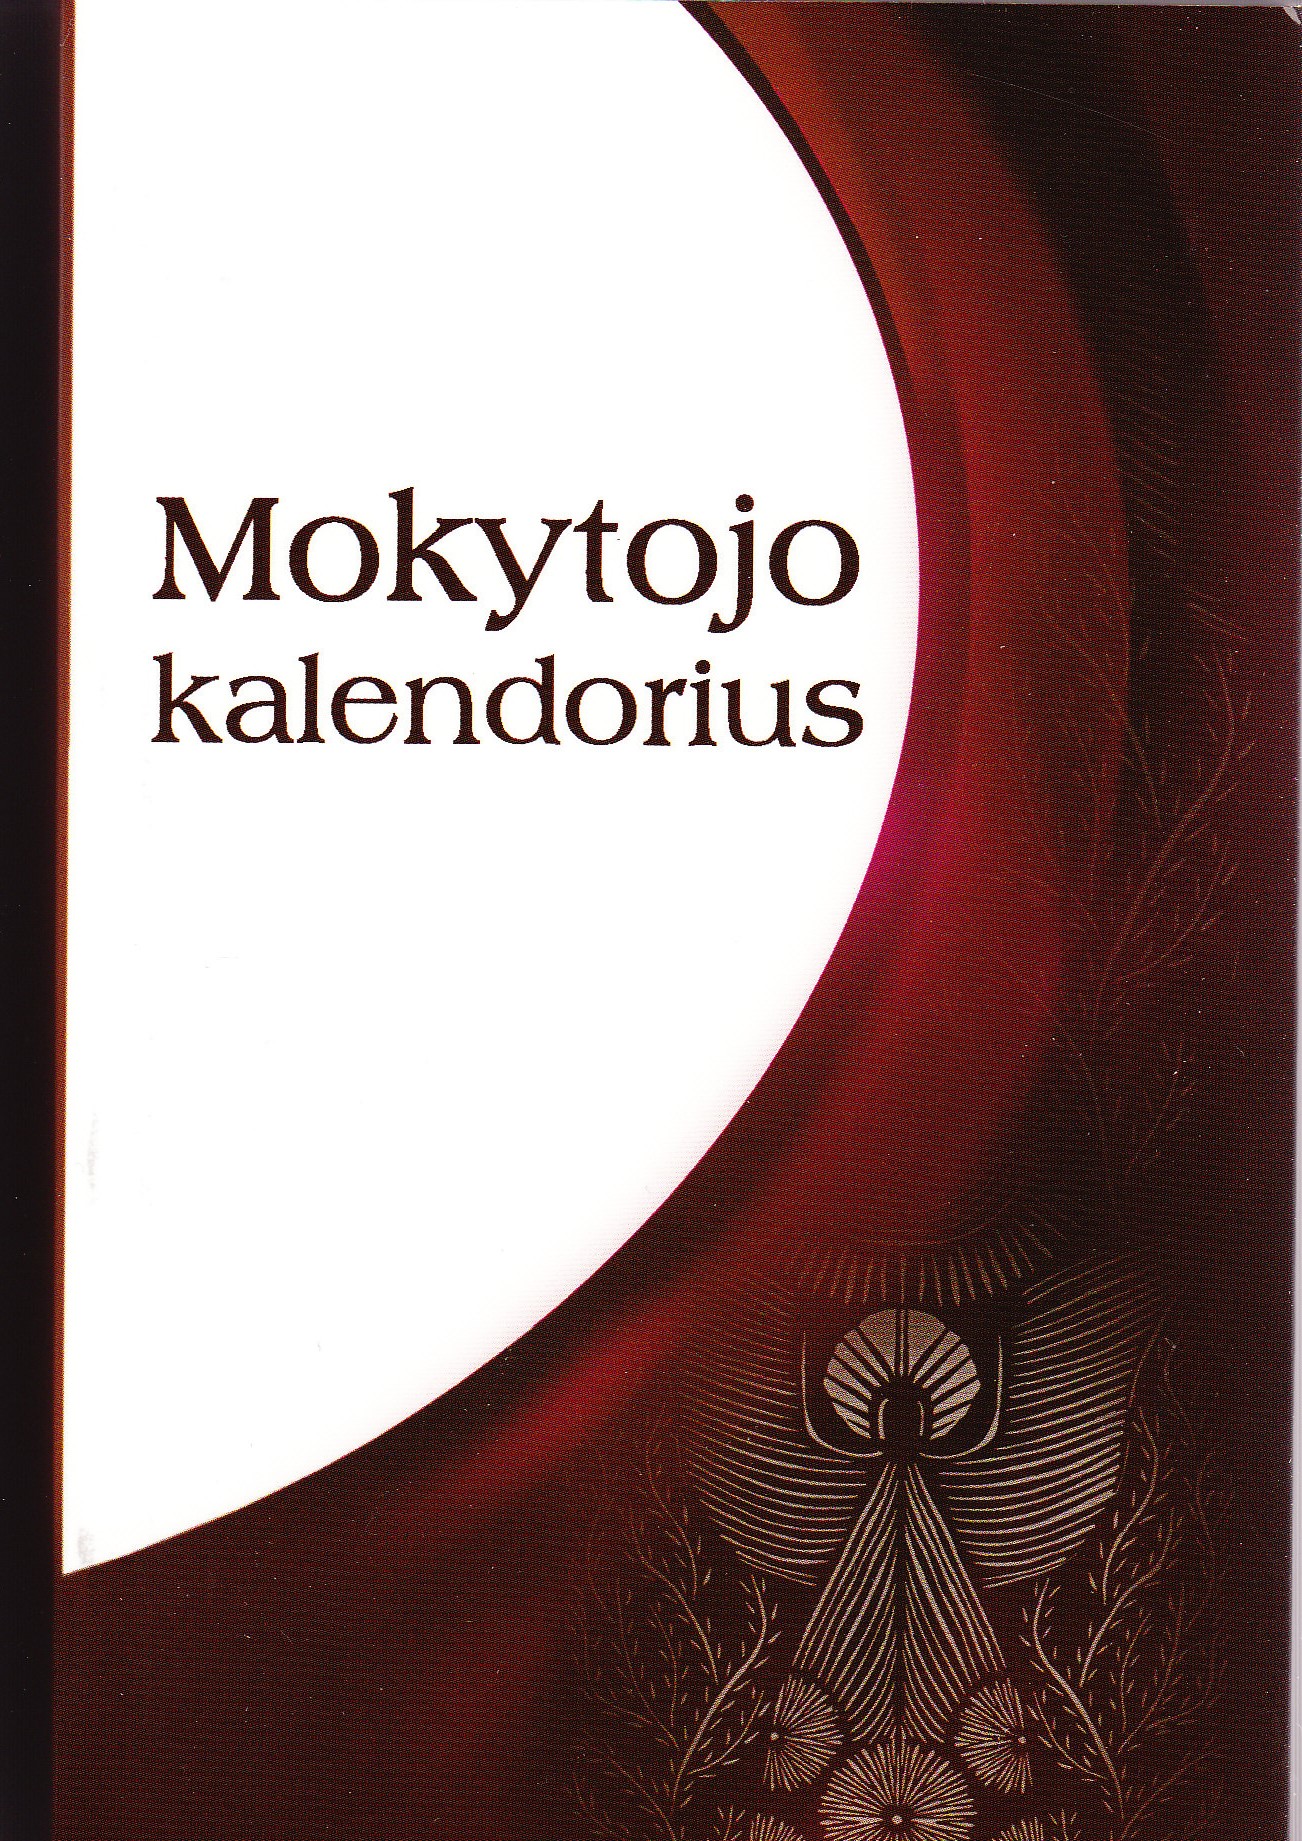 MOKYTOJO KALENDORIUS bordo   1